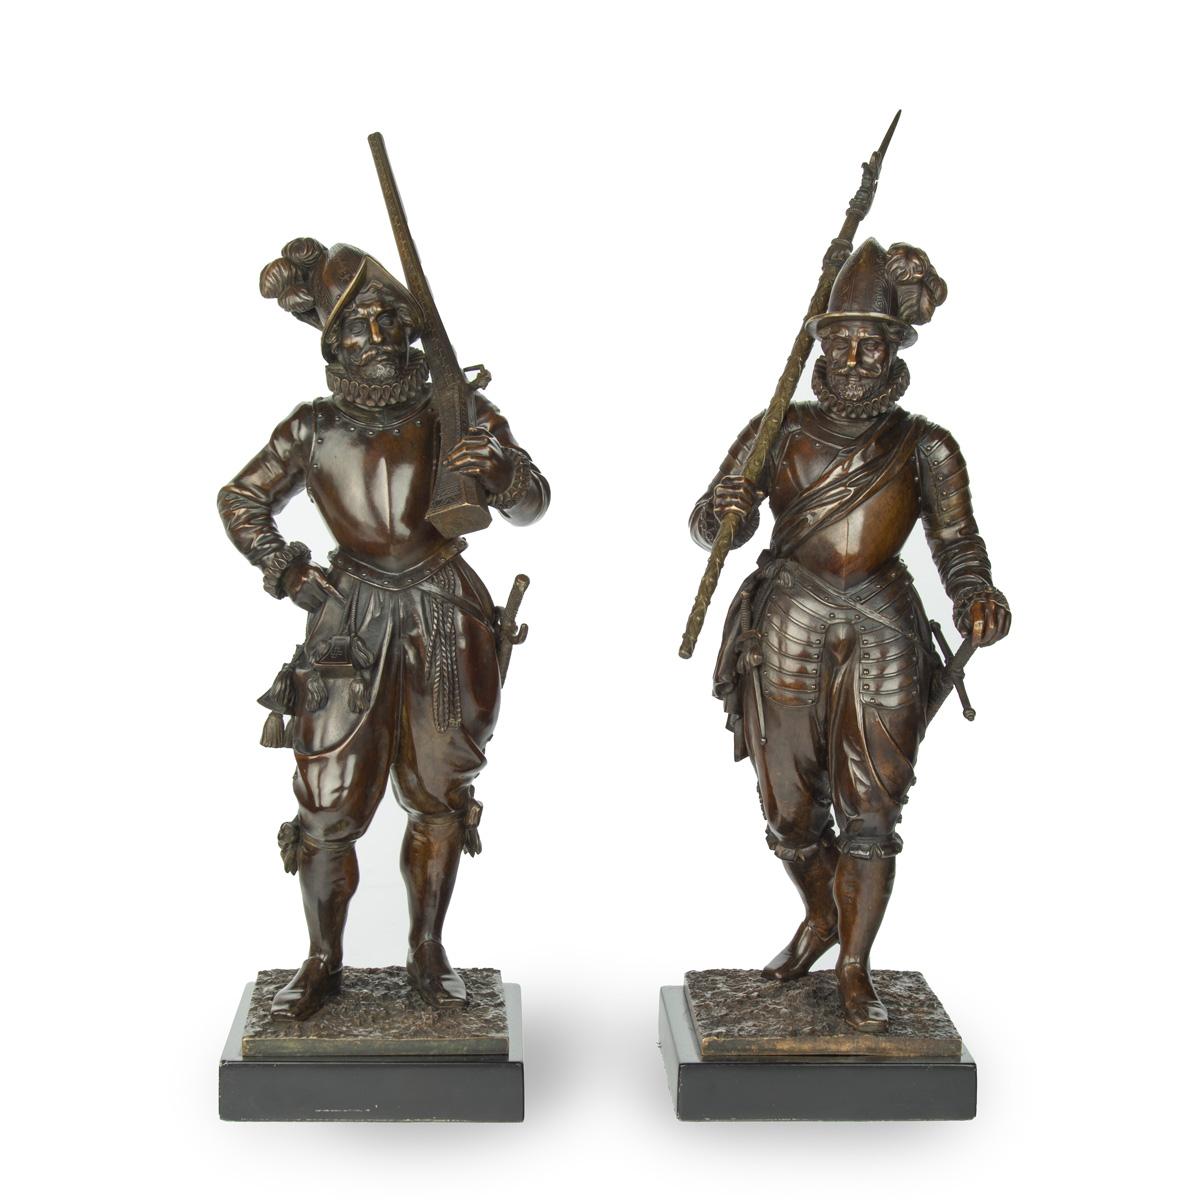 bronze standing figures of Conquistadors